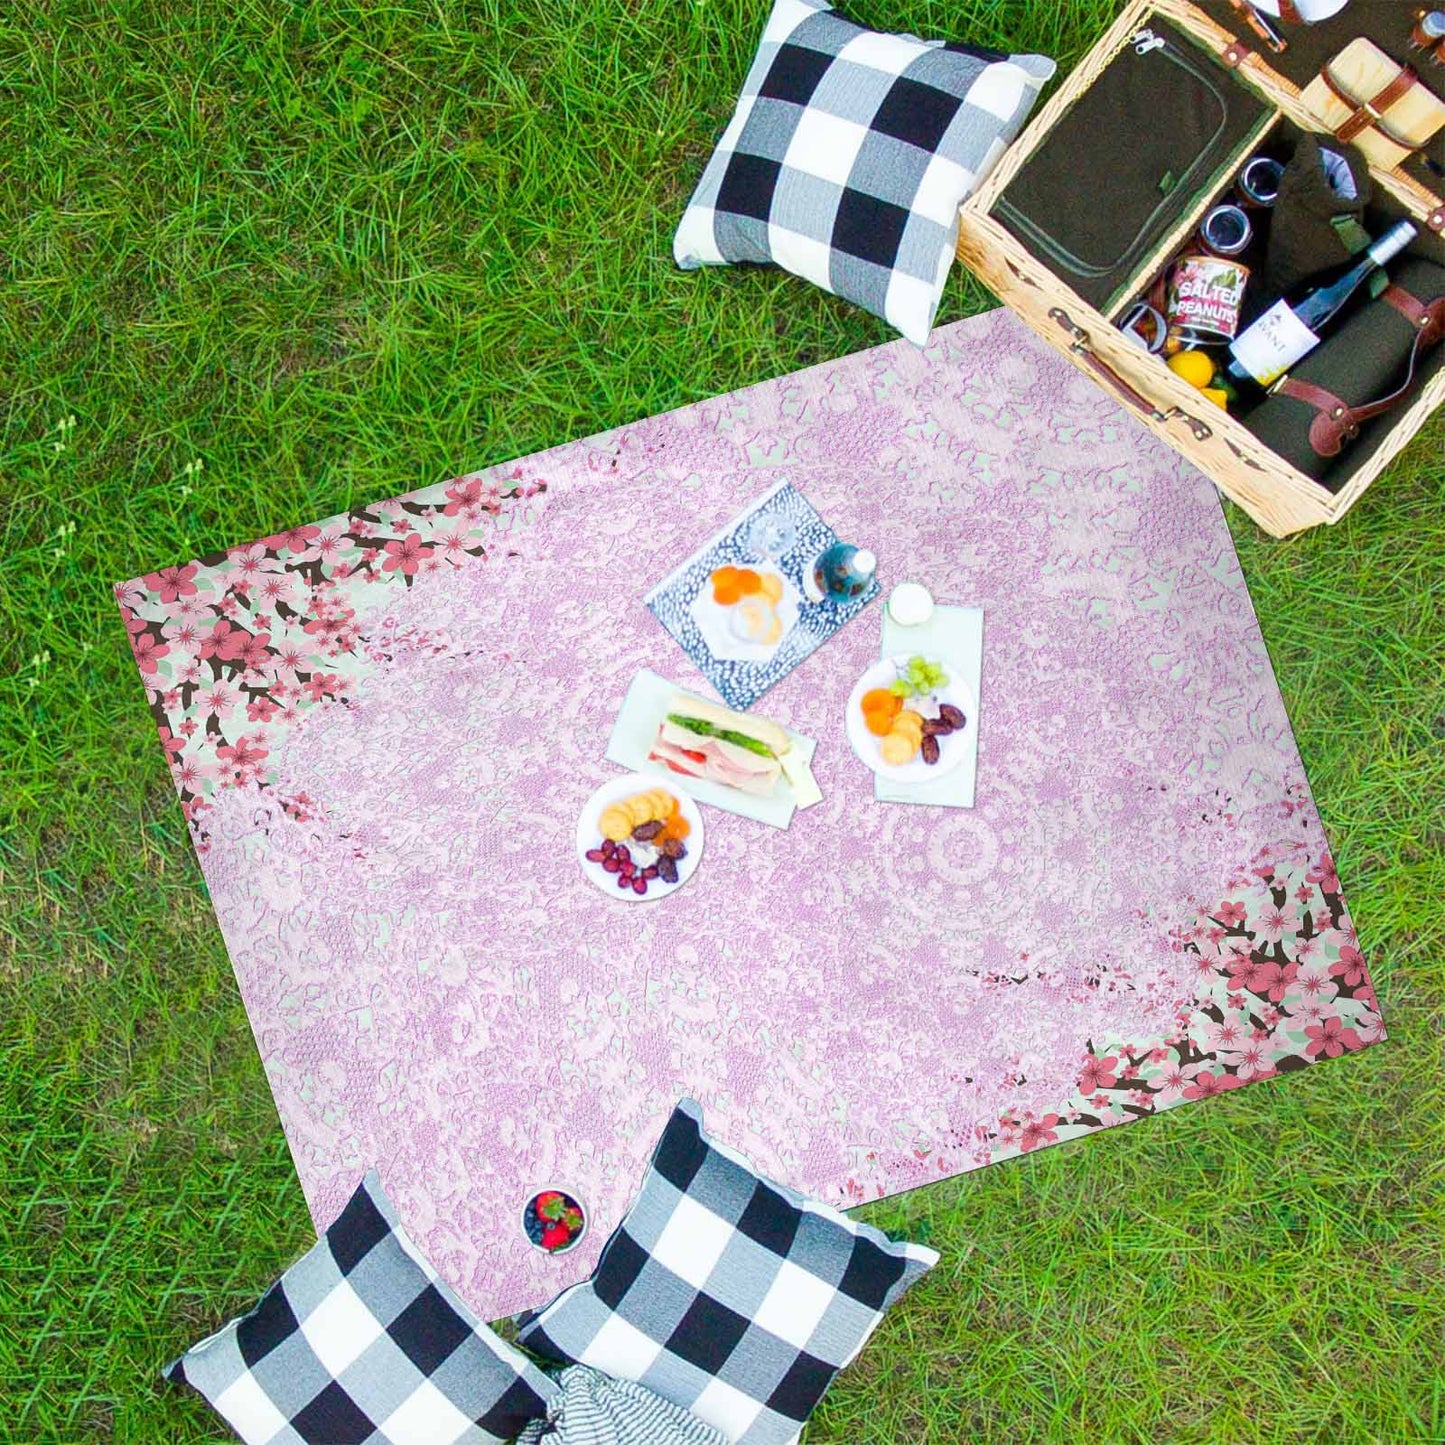 Victorian lace print waterproof picnic mat, 69 x 55in, design 09